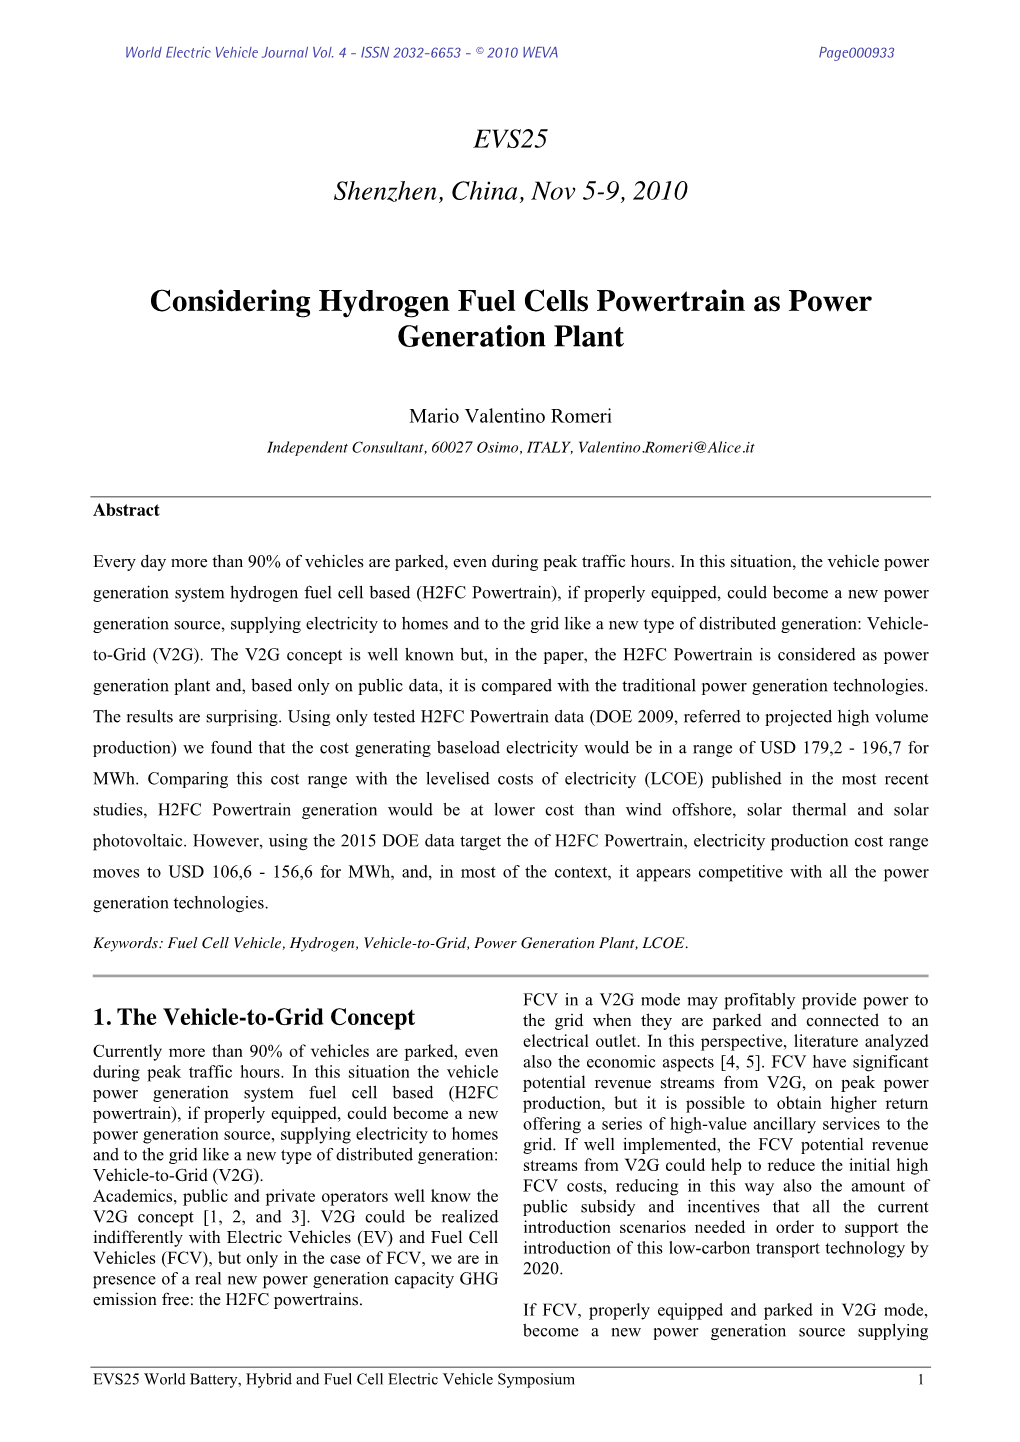 Considering Hydrogen Fuel Cells Powertrain As Power Generation Plant